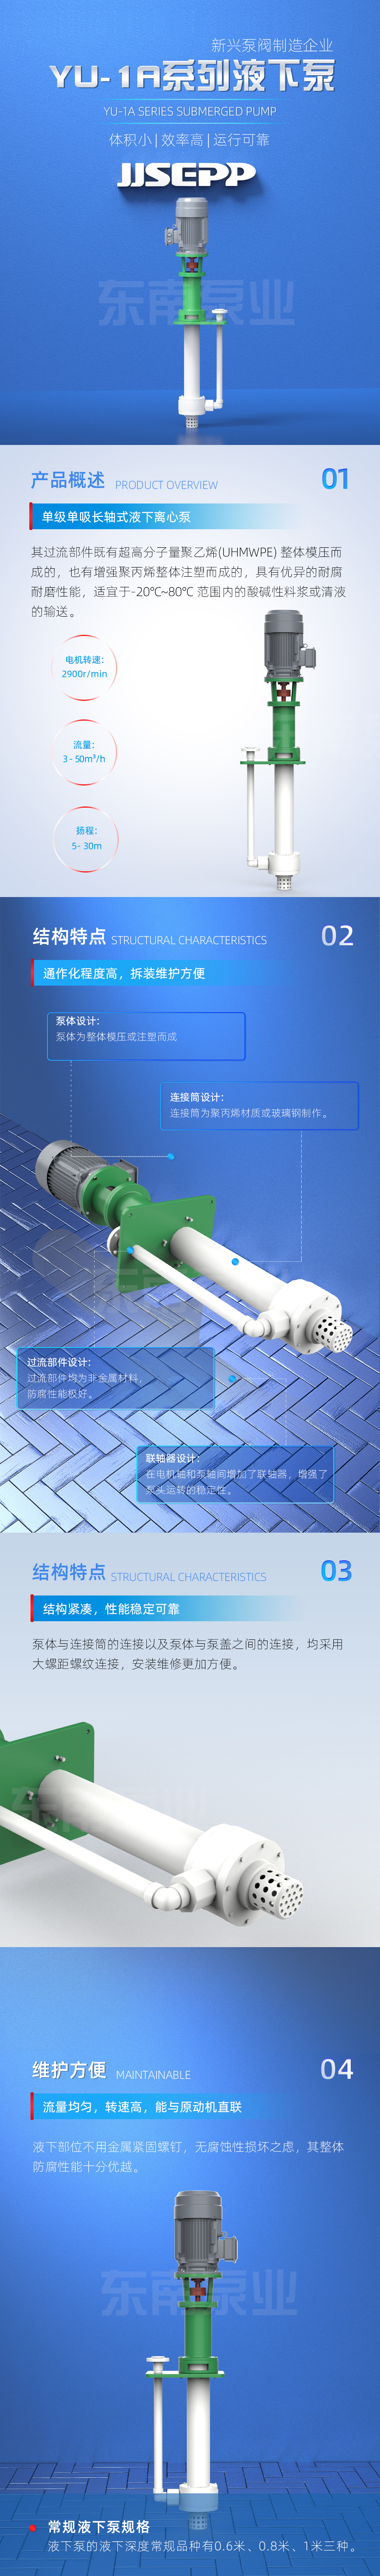 YU-1A系列耐腐耐磨液下泵.jpg